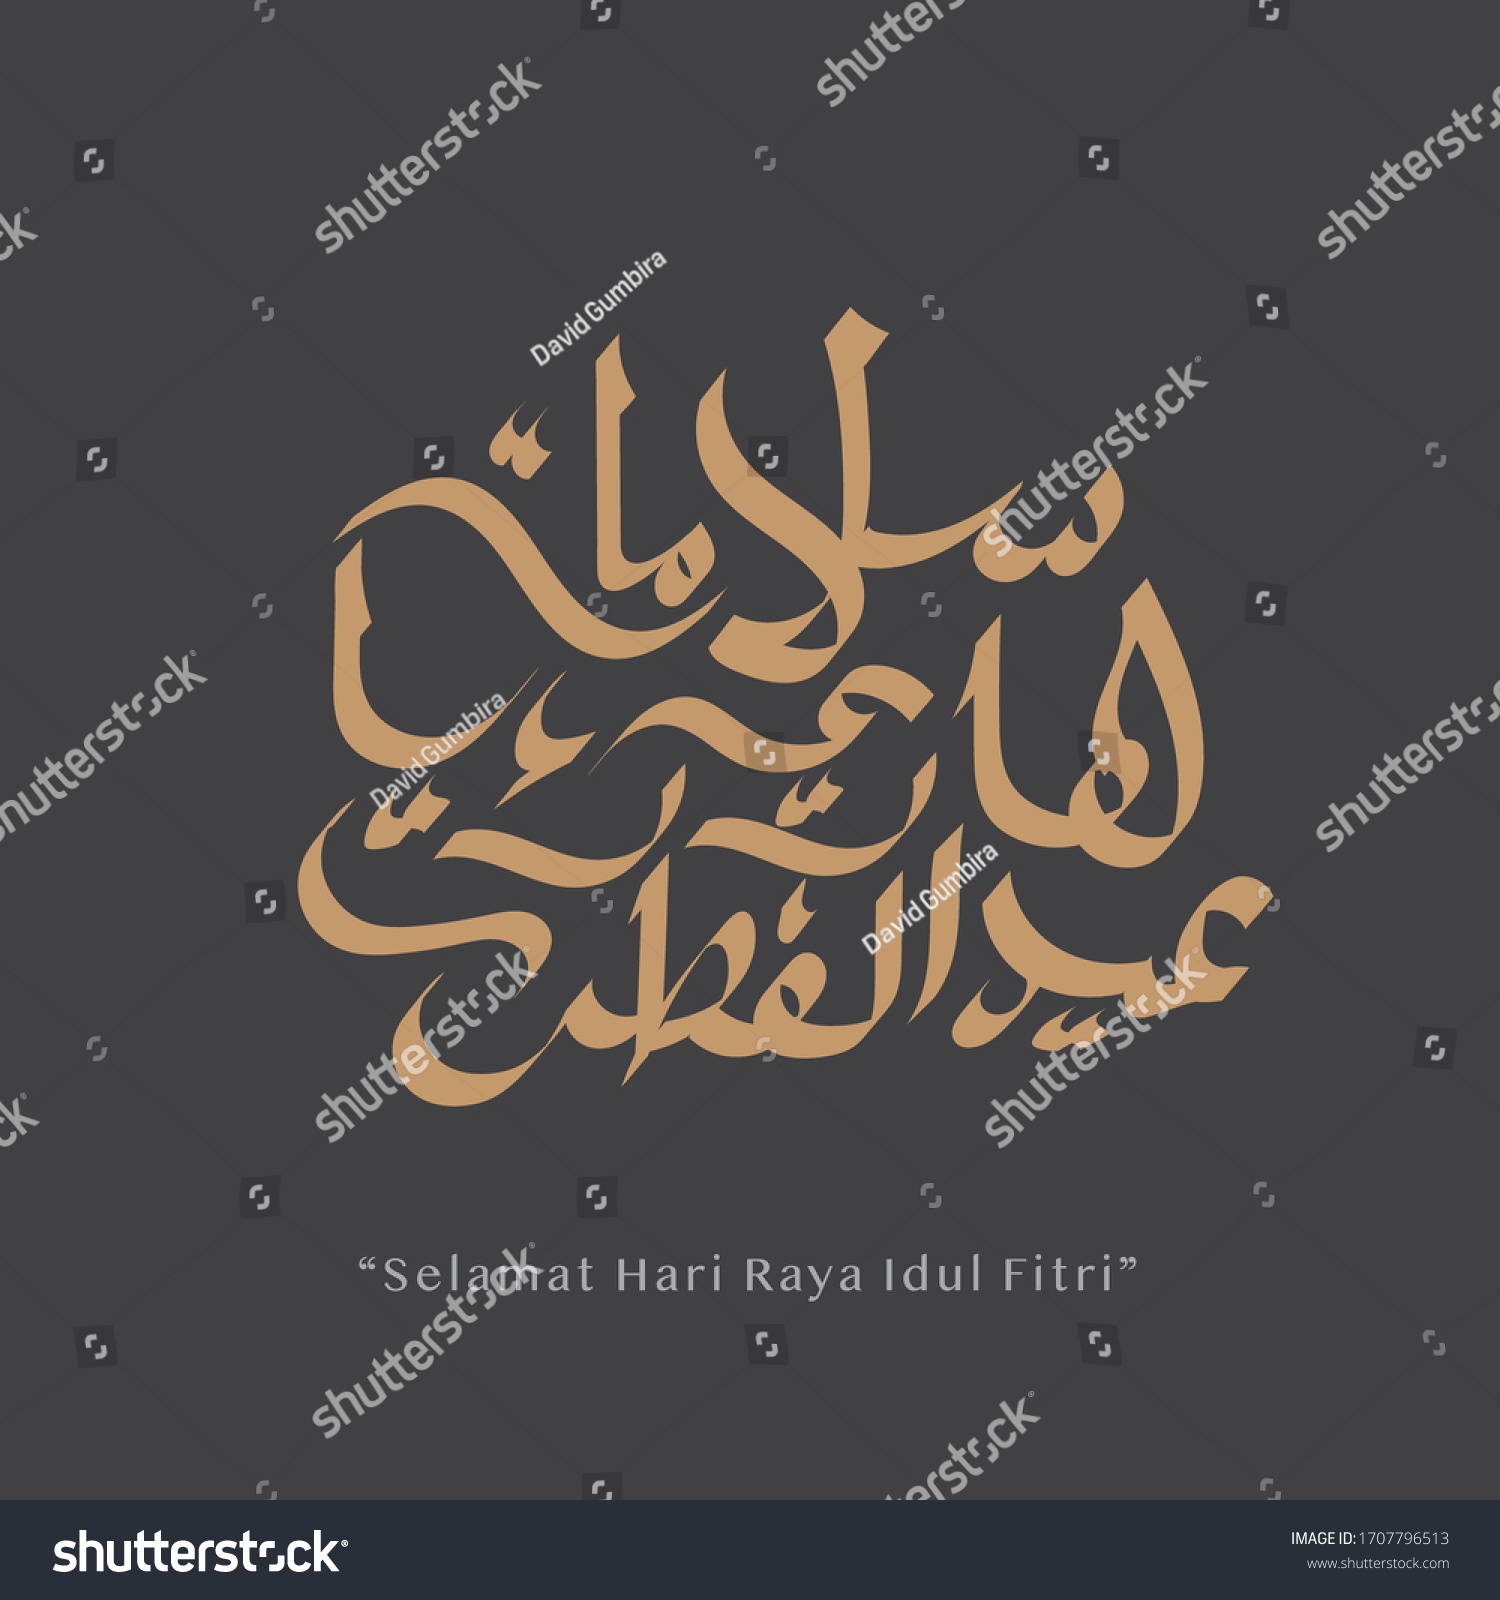 Selamat Hari Raya Idul Firti Vector Calligraphy Royalty Free Stock